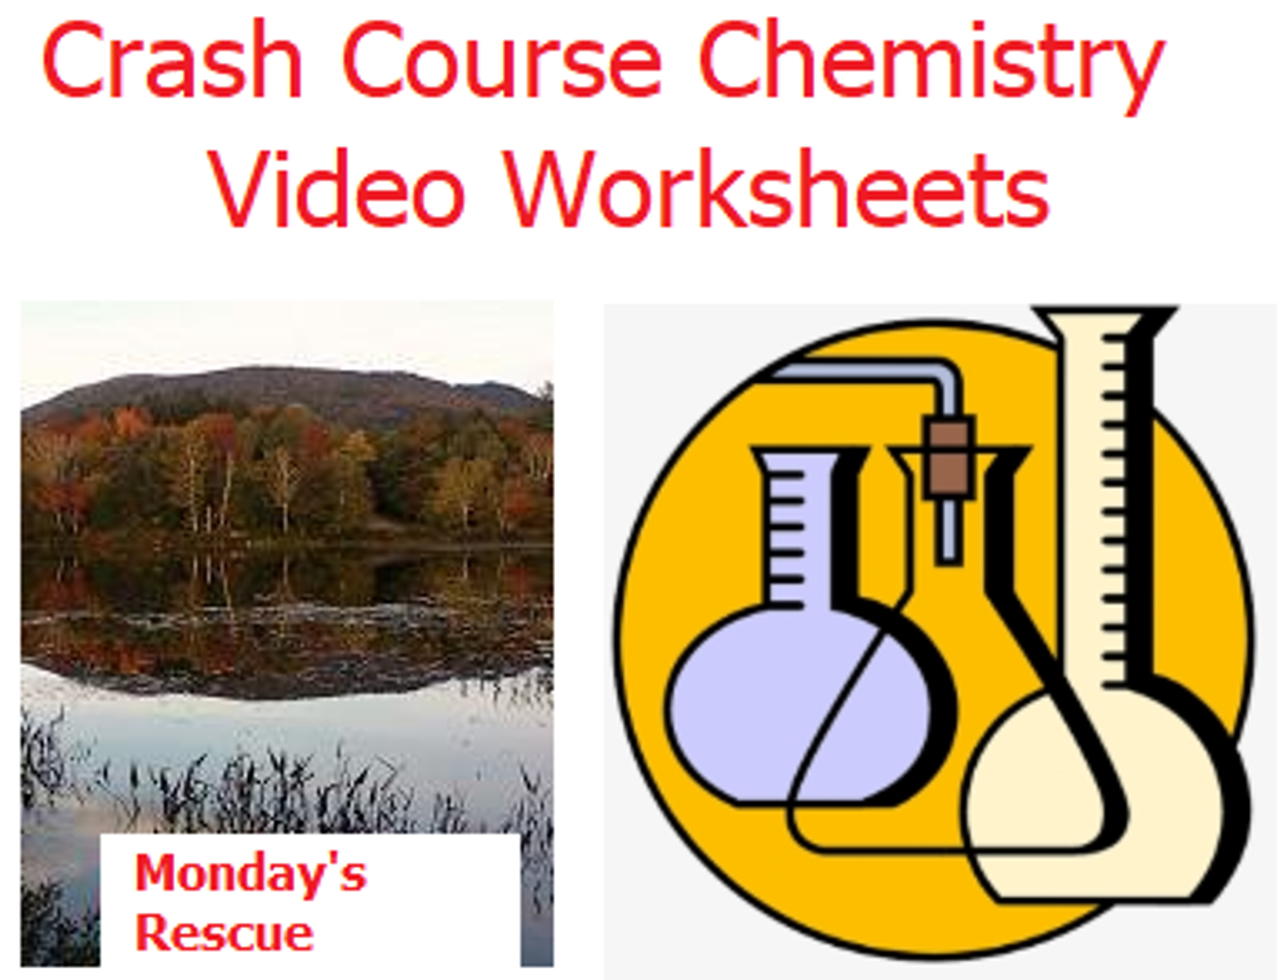 Crash Course Chemistry Video Worksheets Guide (Complete Set)